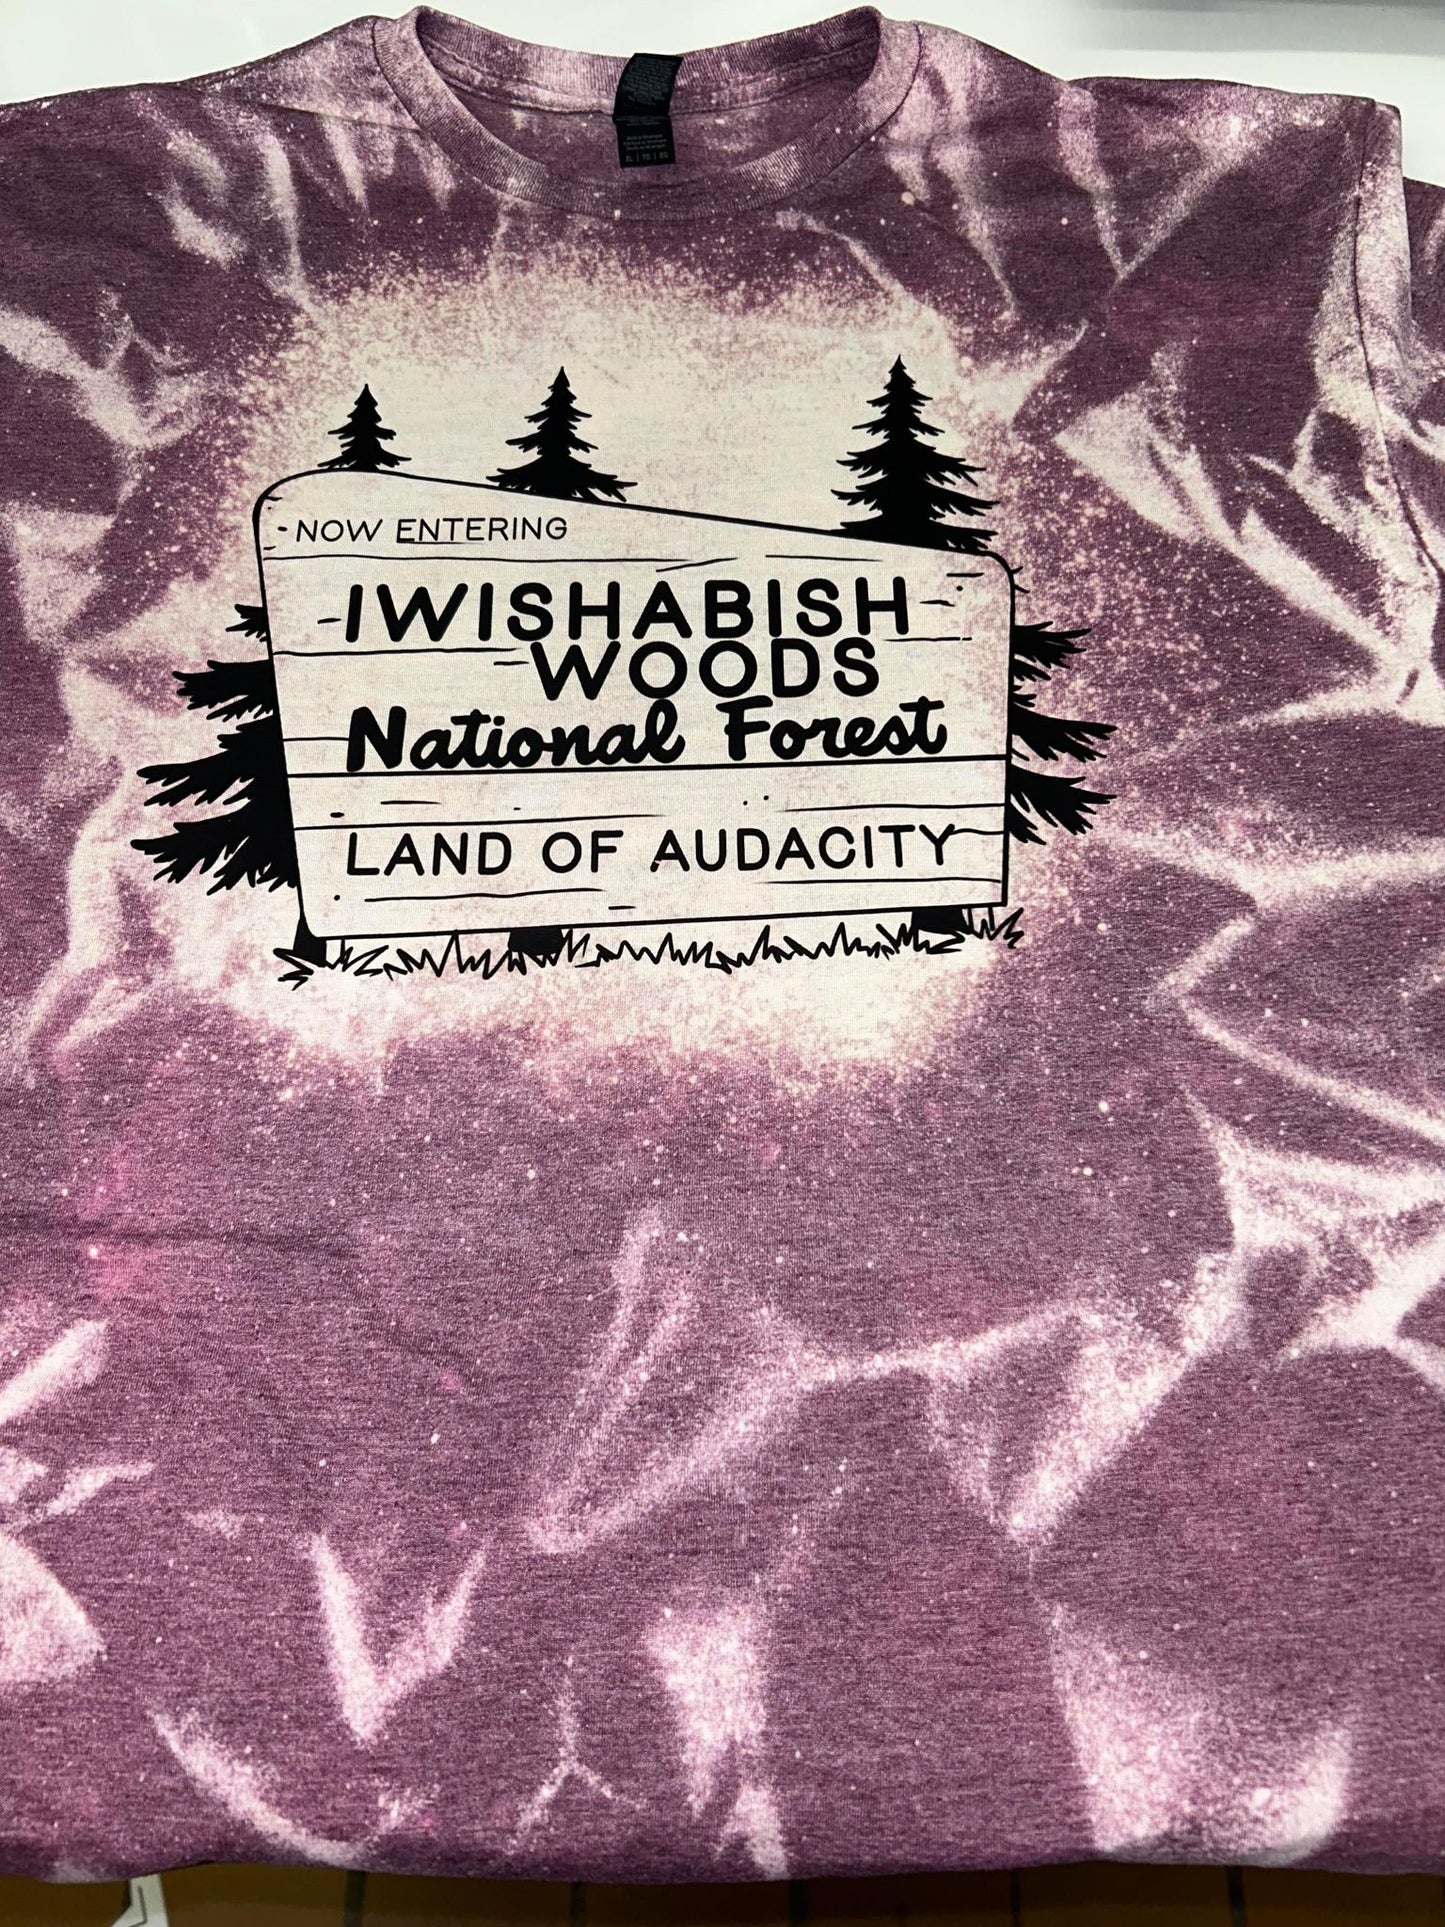 I Wishabish Woods National Forest